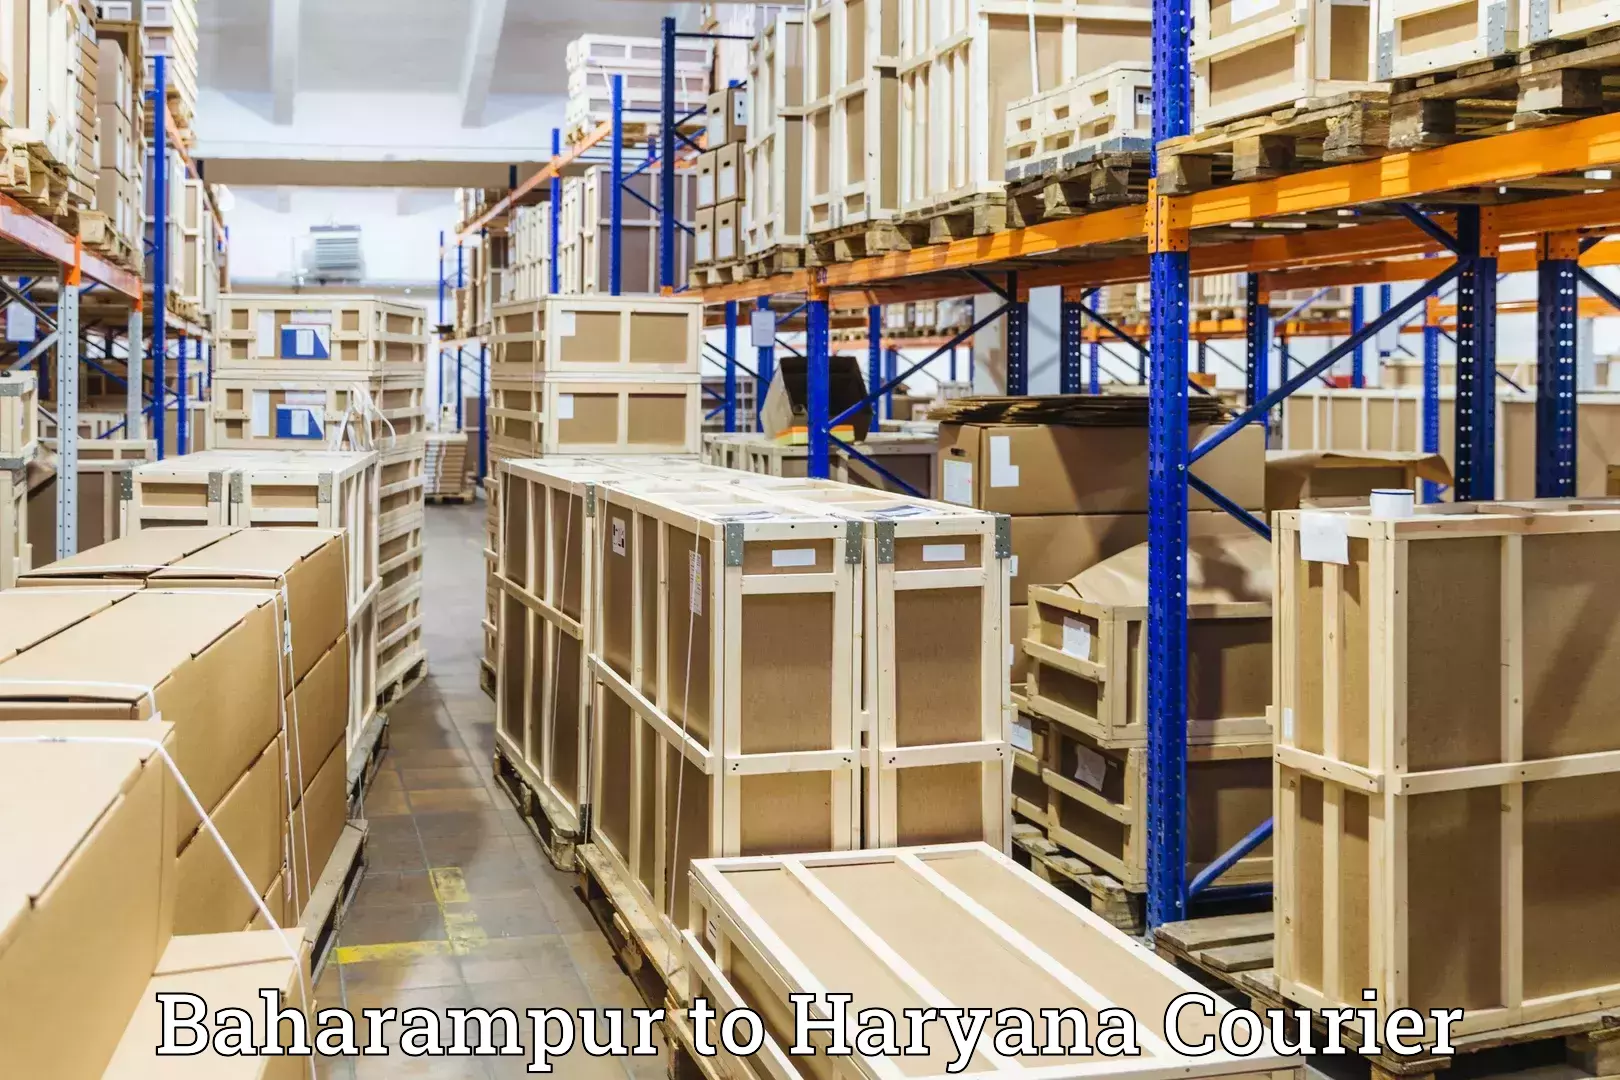 Baggage shipping experts Baharampur to Hansi